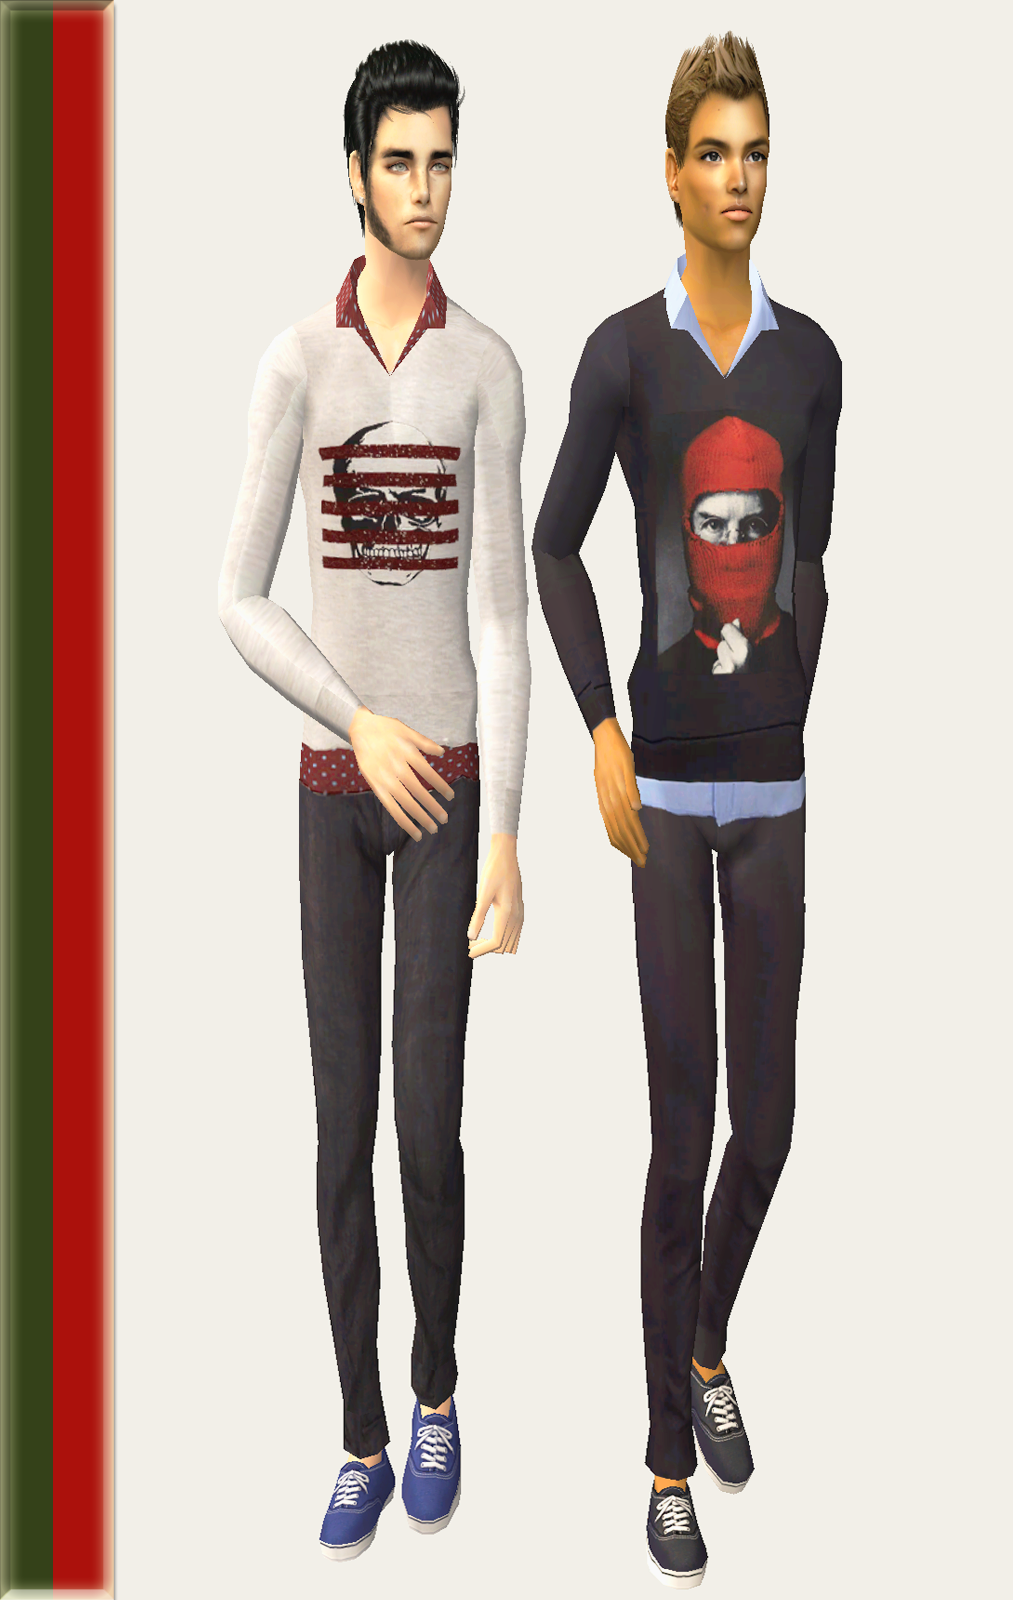 одежда -  The Sims 2. Мужская одежда: повседневная. - Страница 22 Gift-3